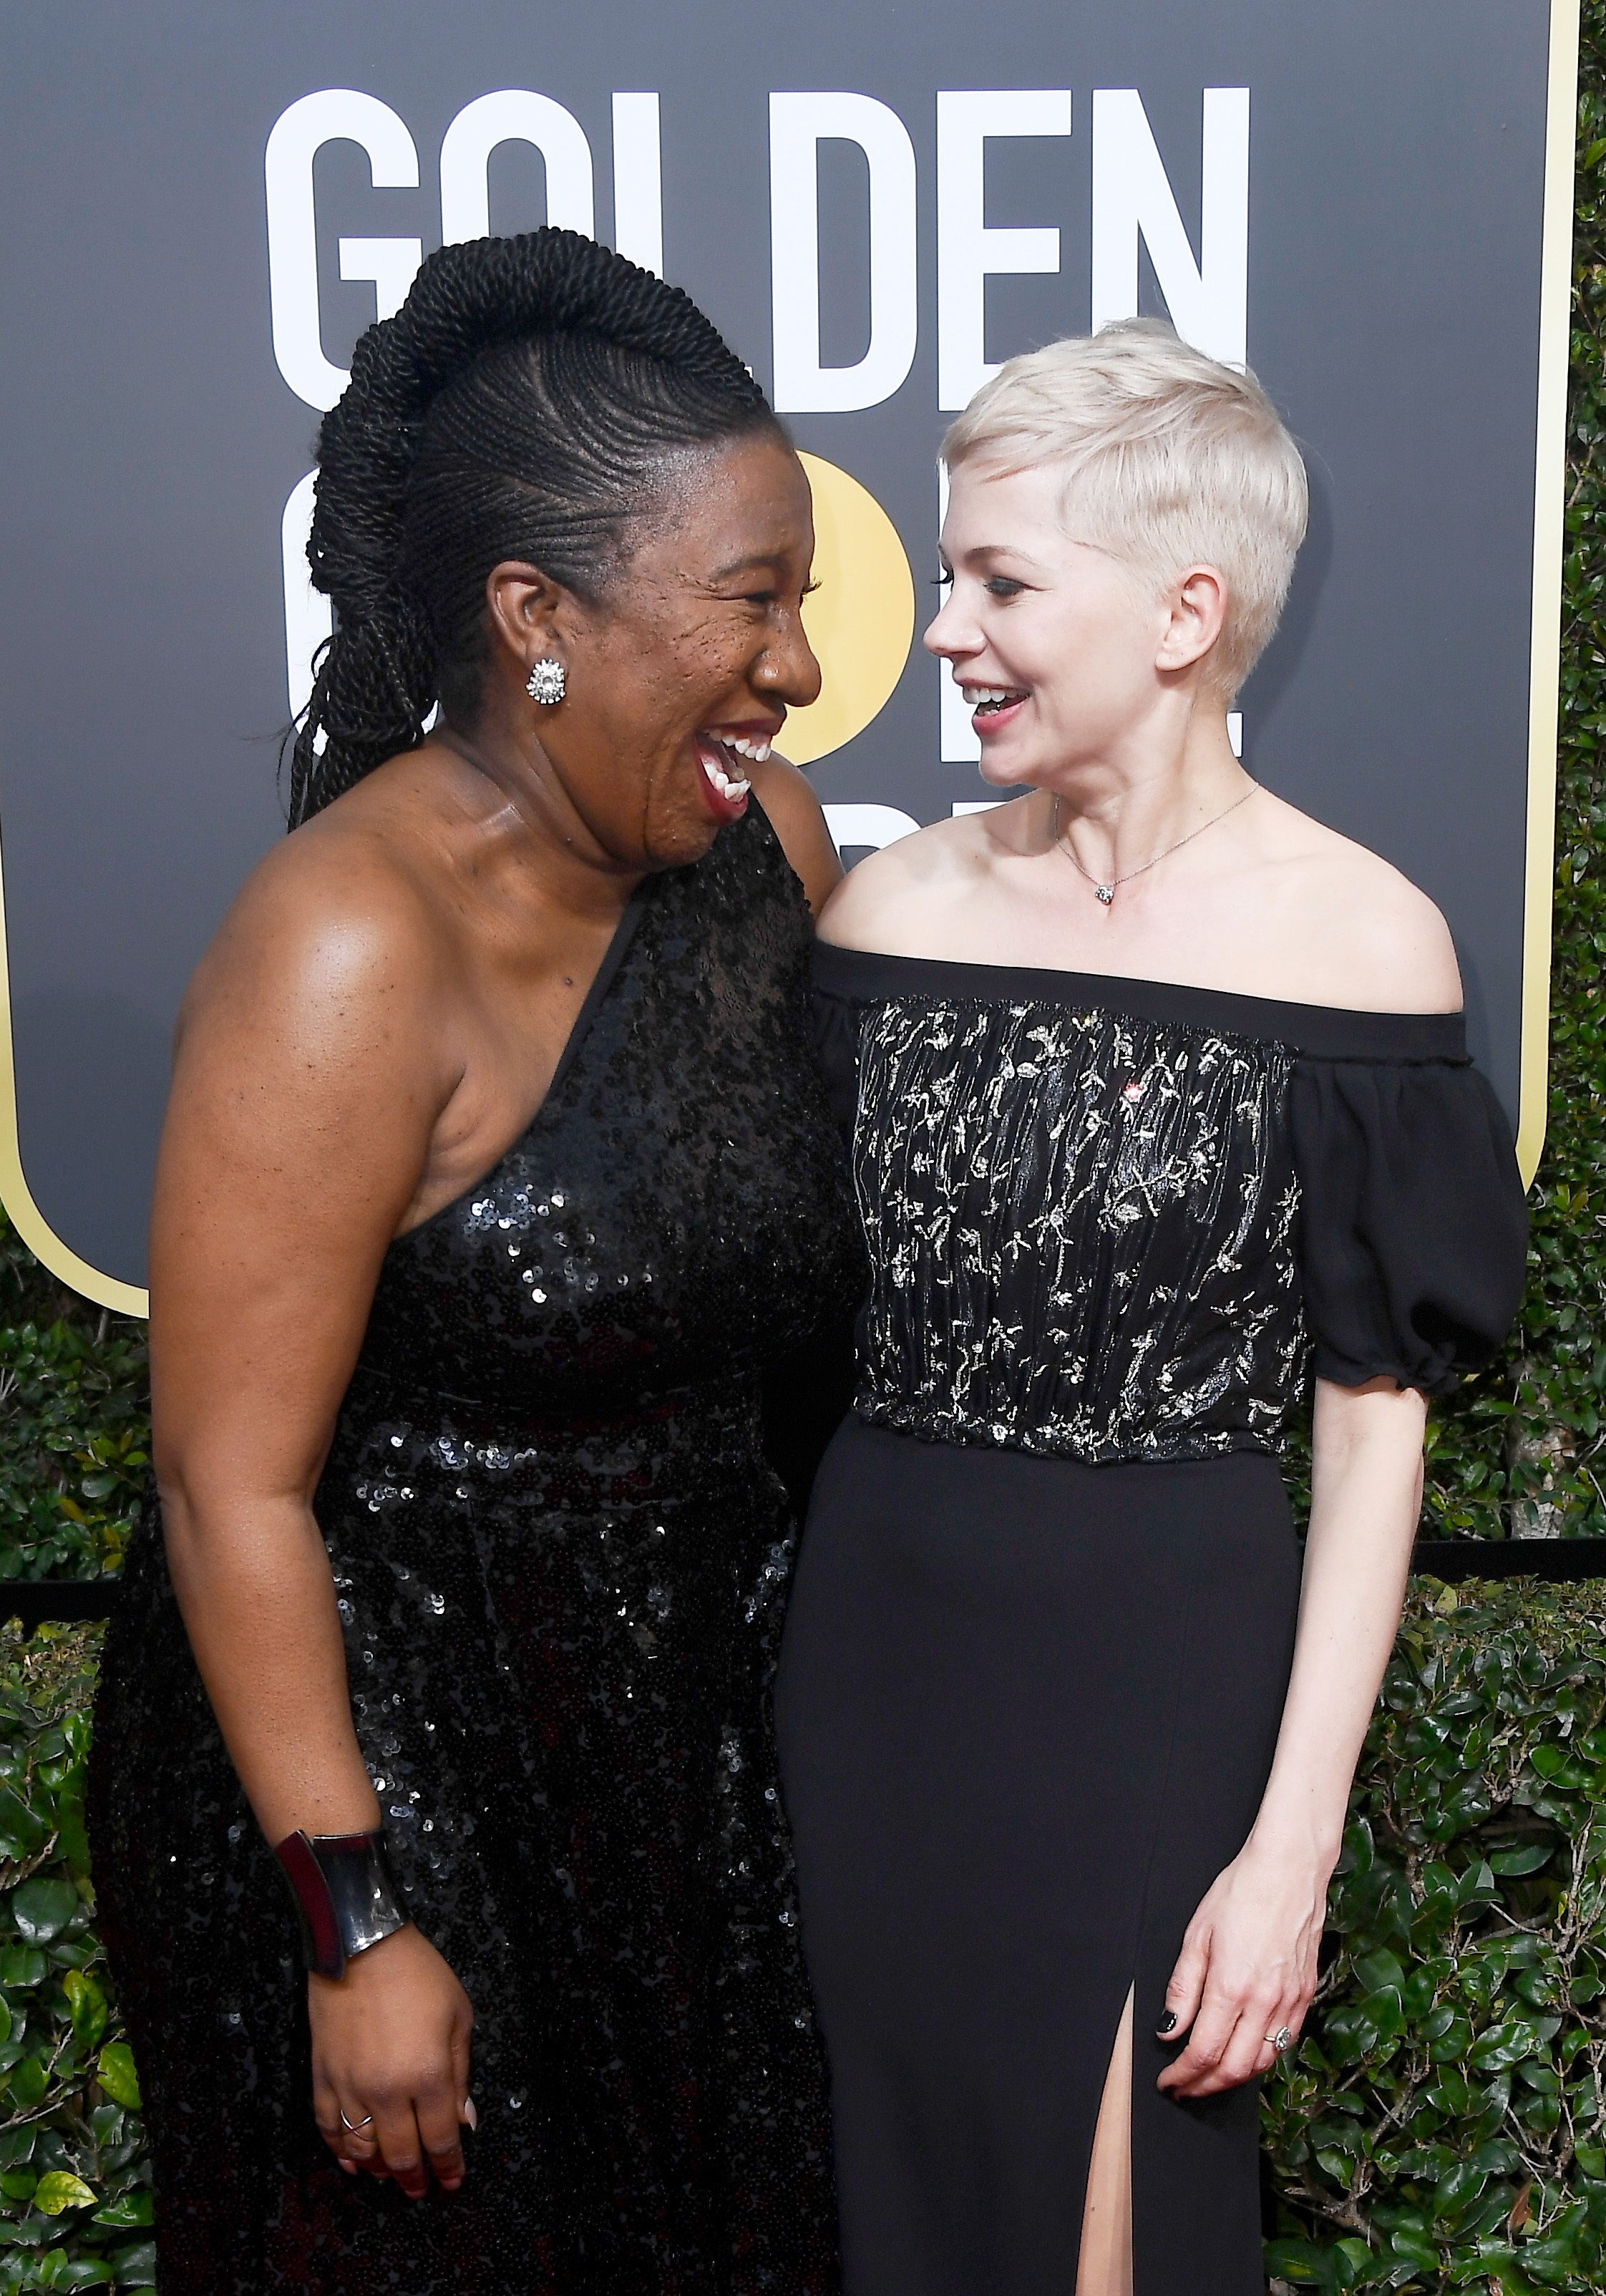 Golden Globes 2018 Protest, Stars Wearing Black At Golden Globes, Who Wore Black On Golden Globes Red Carpet, Actresses Wearing Black To Golden Globe Awards